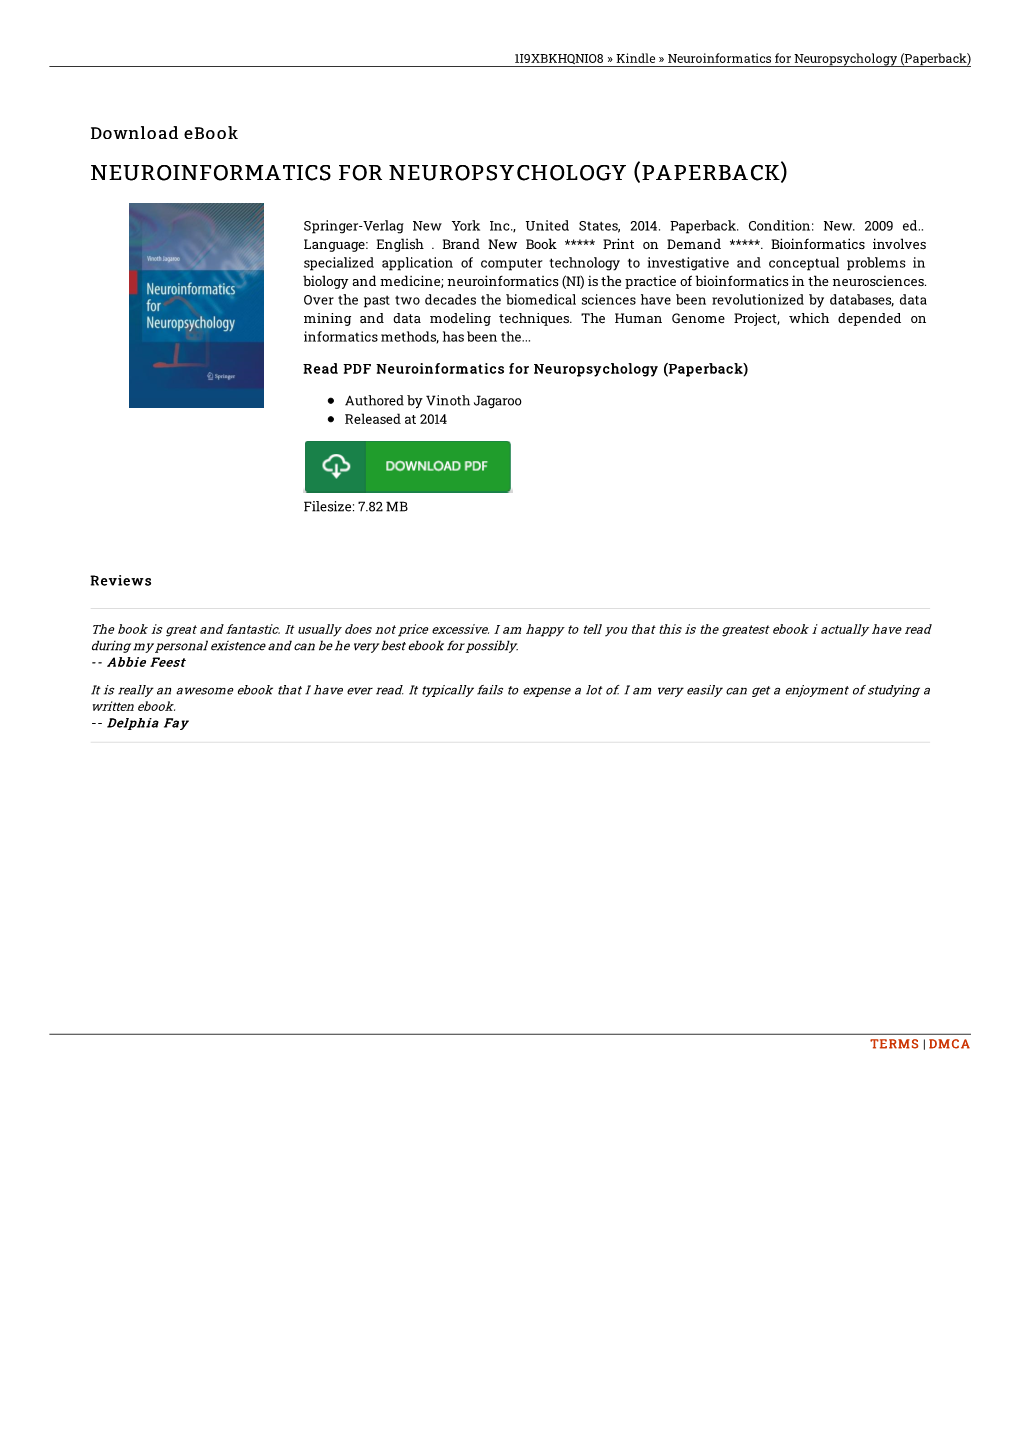 Find PDF ~ Neuroinformatics for Neuropsychology (Paperback)